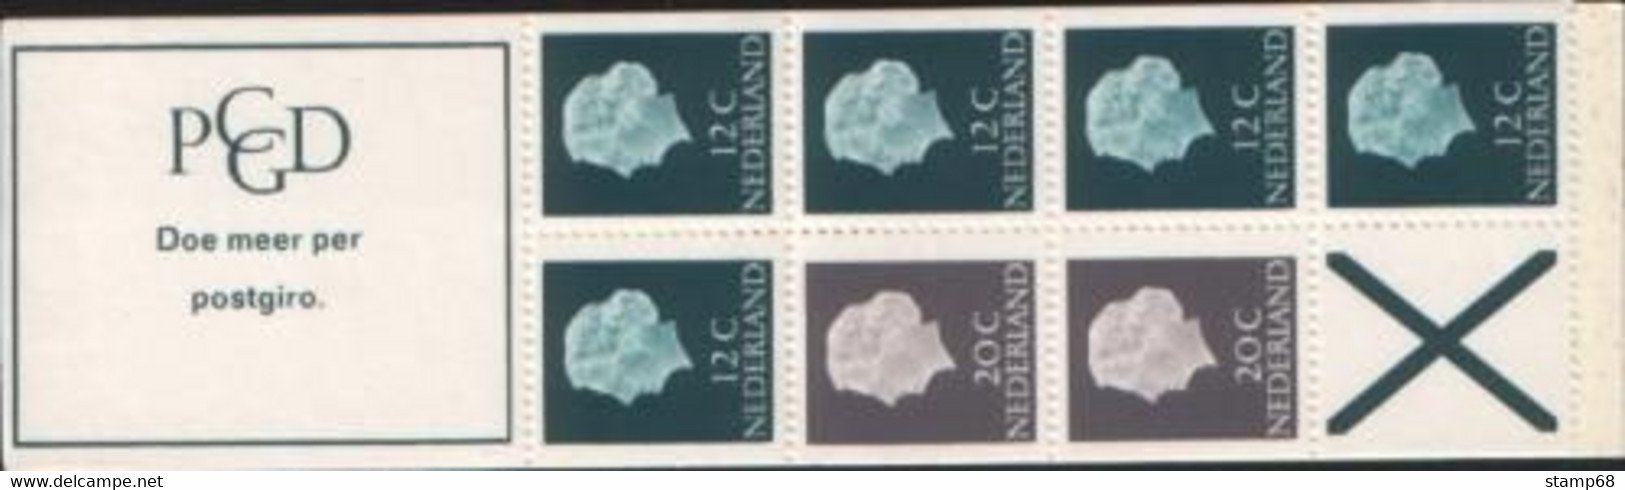 Nederland NVPH PB7bF Postzegelboekje 1968 MNH Postfris - Libretti